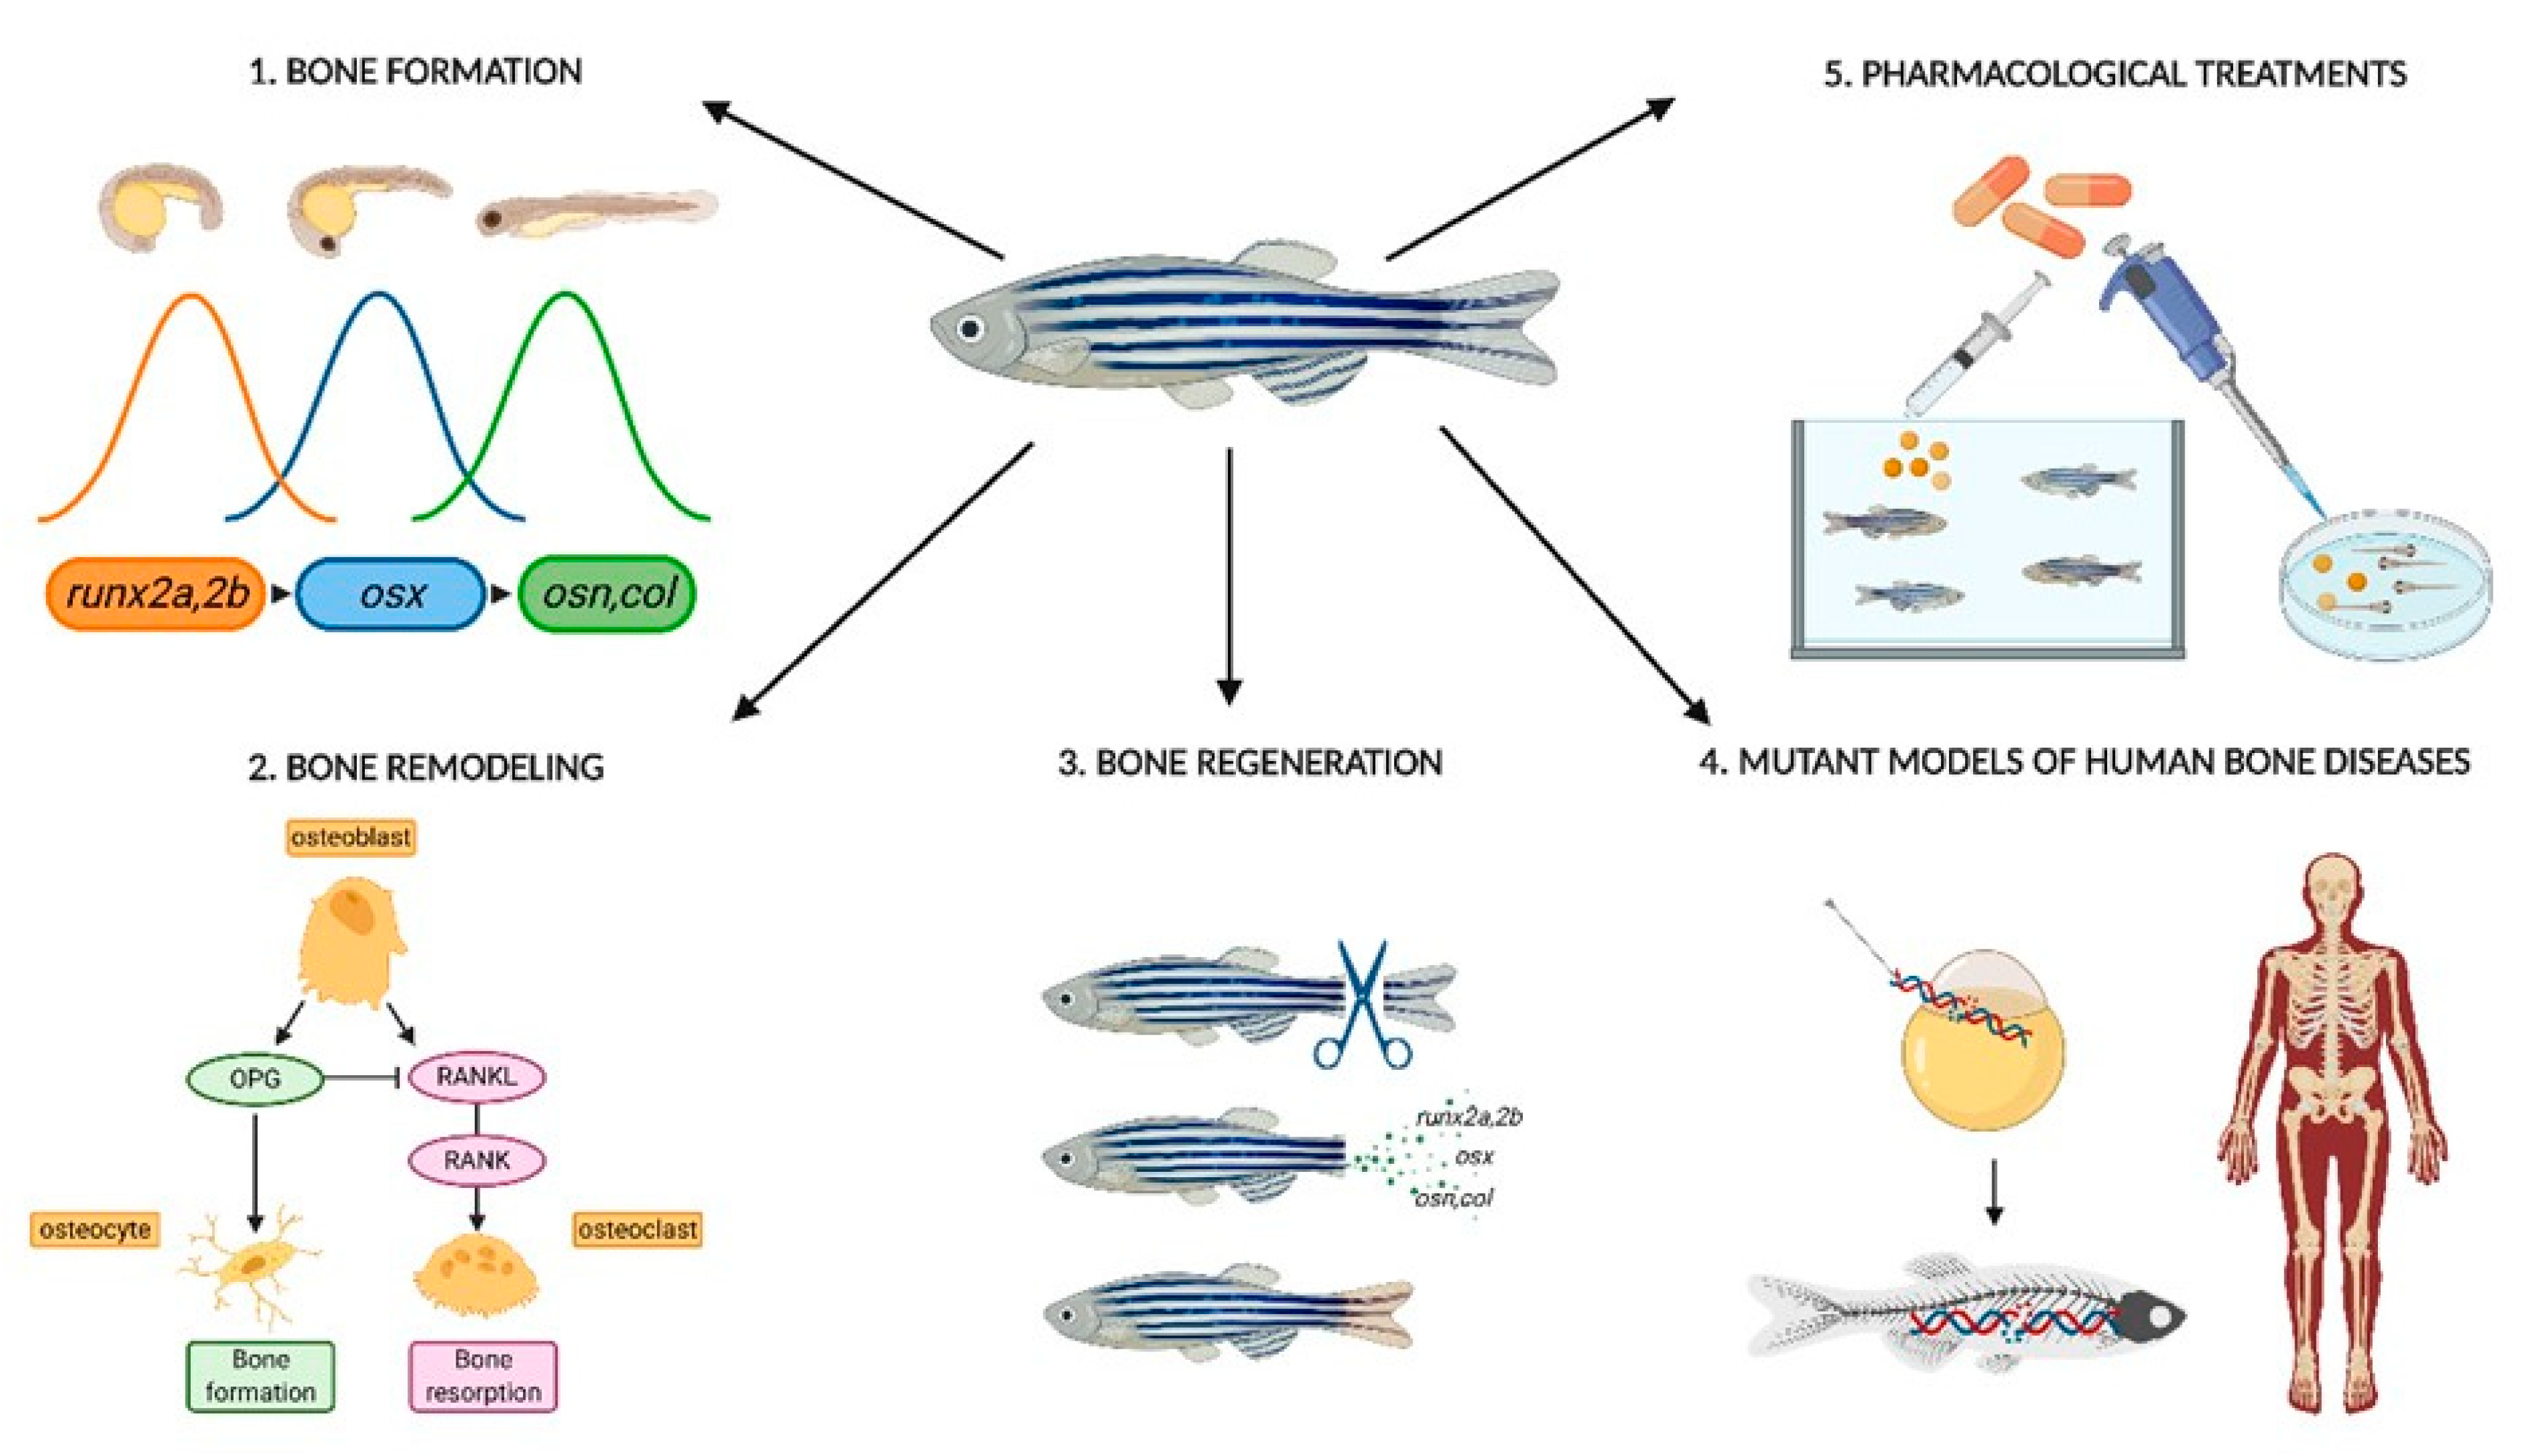 zebrafish for genetic research